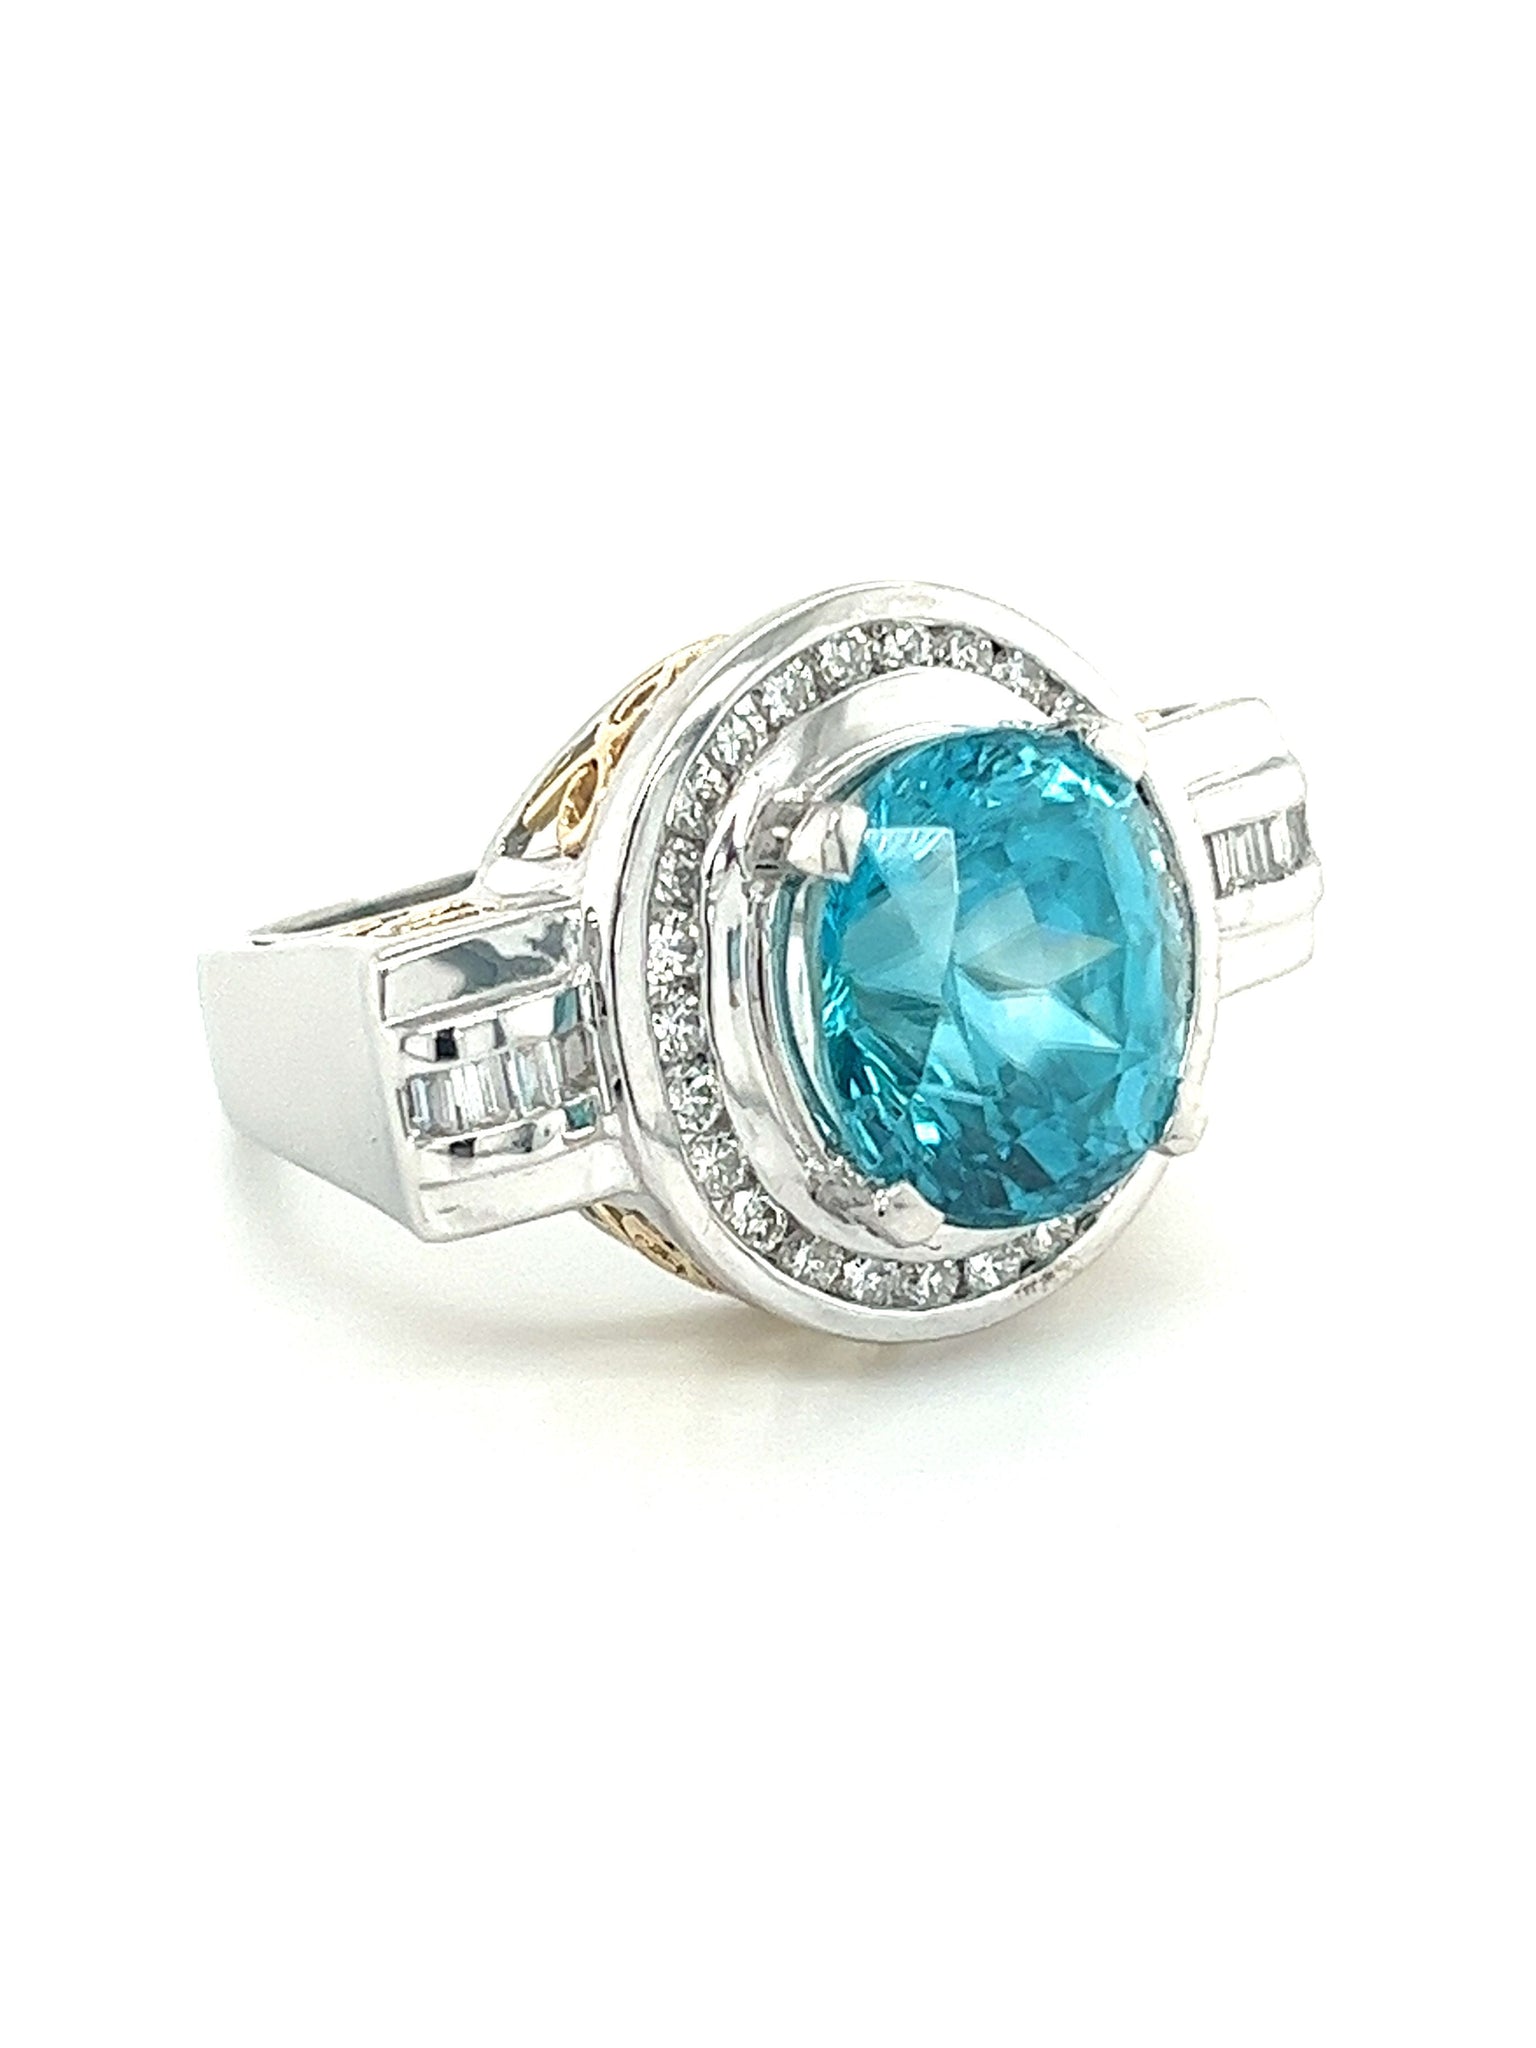 Vintage Retro Style 8 Carat Oval Cut Blue Zircon with Diamond Halo in Platinum & 18K Gold Filigree Set Ring